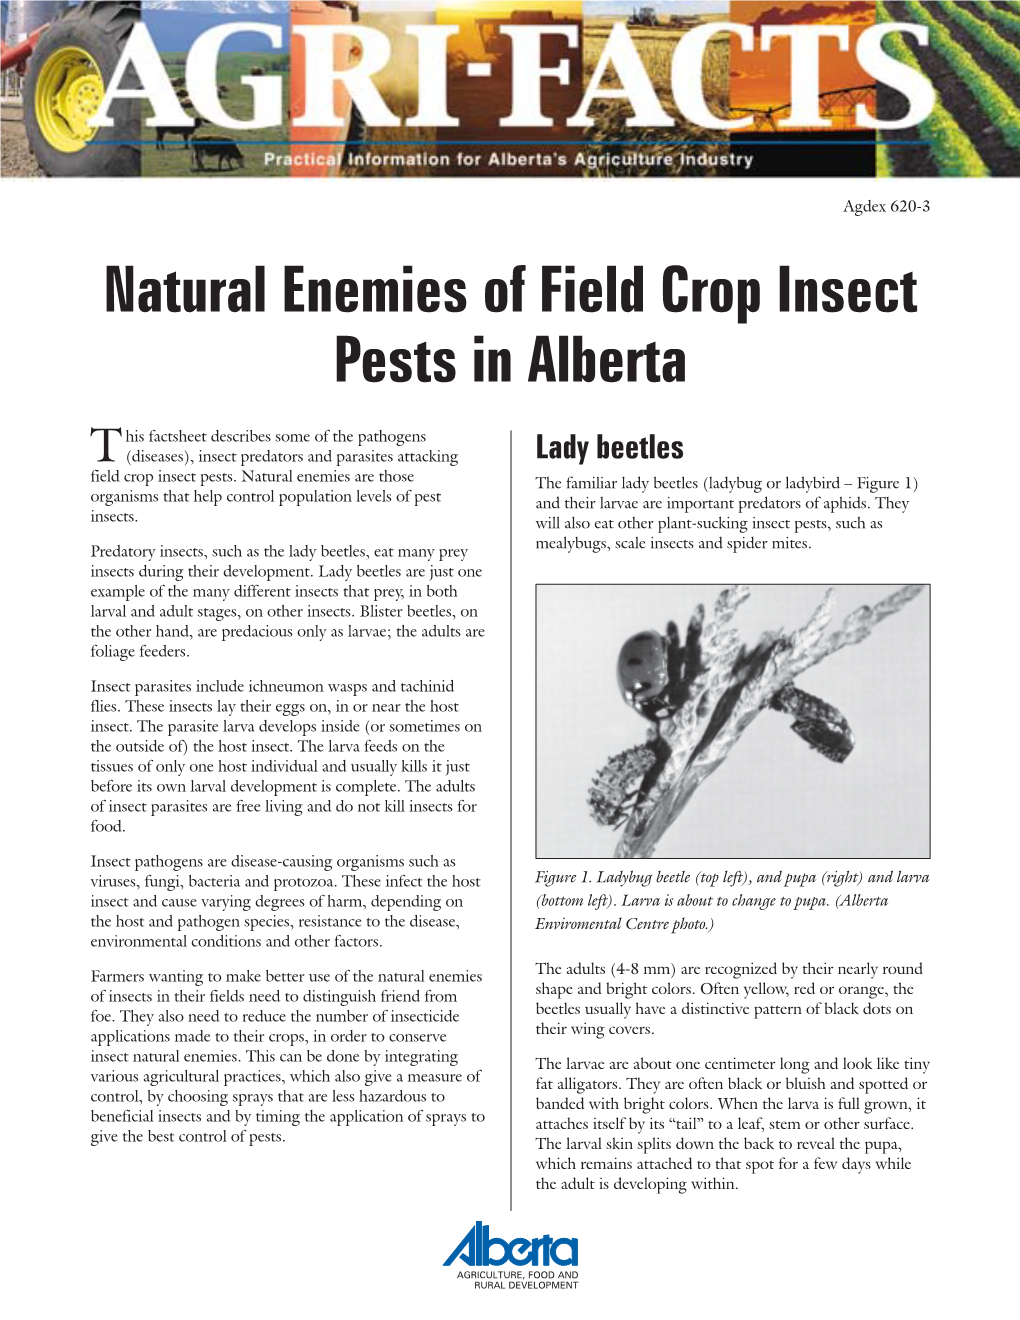 Natural Enemies of Field Crop Insect Pests in Alberta